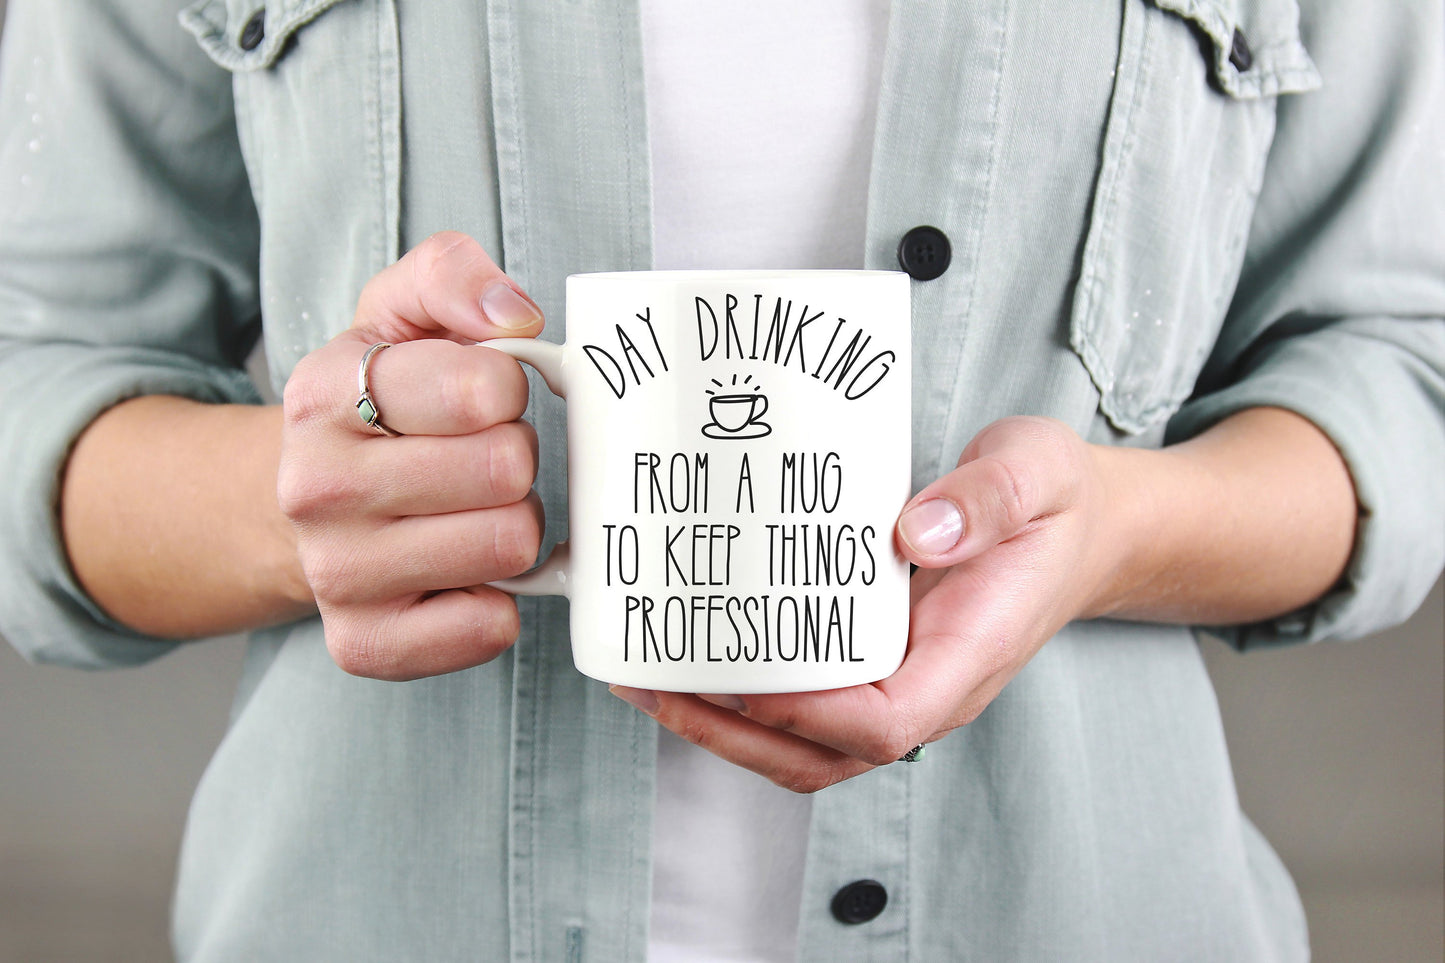 Day Drinking From A Mug To Keep Things Professional Mug - Funny Coffee Mug, Office Mug, Day Drinking Mug, Coworker Mug, Wine Lover Gift